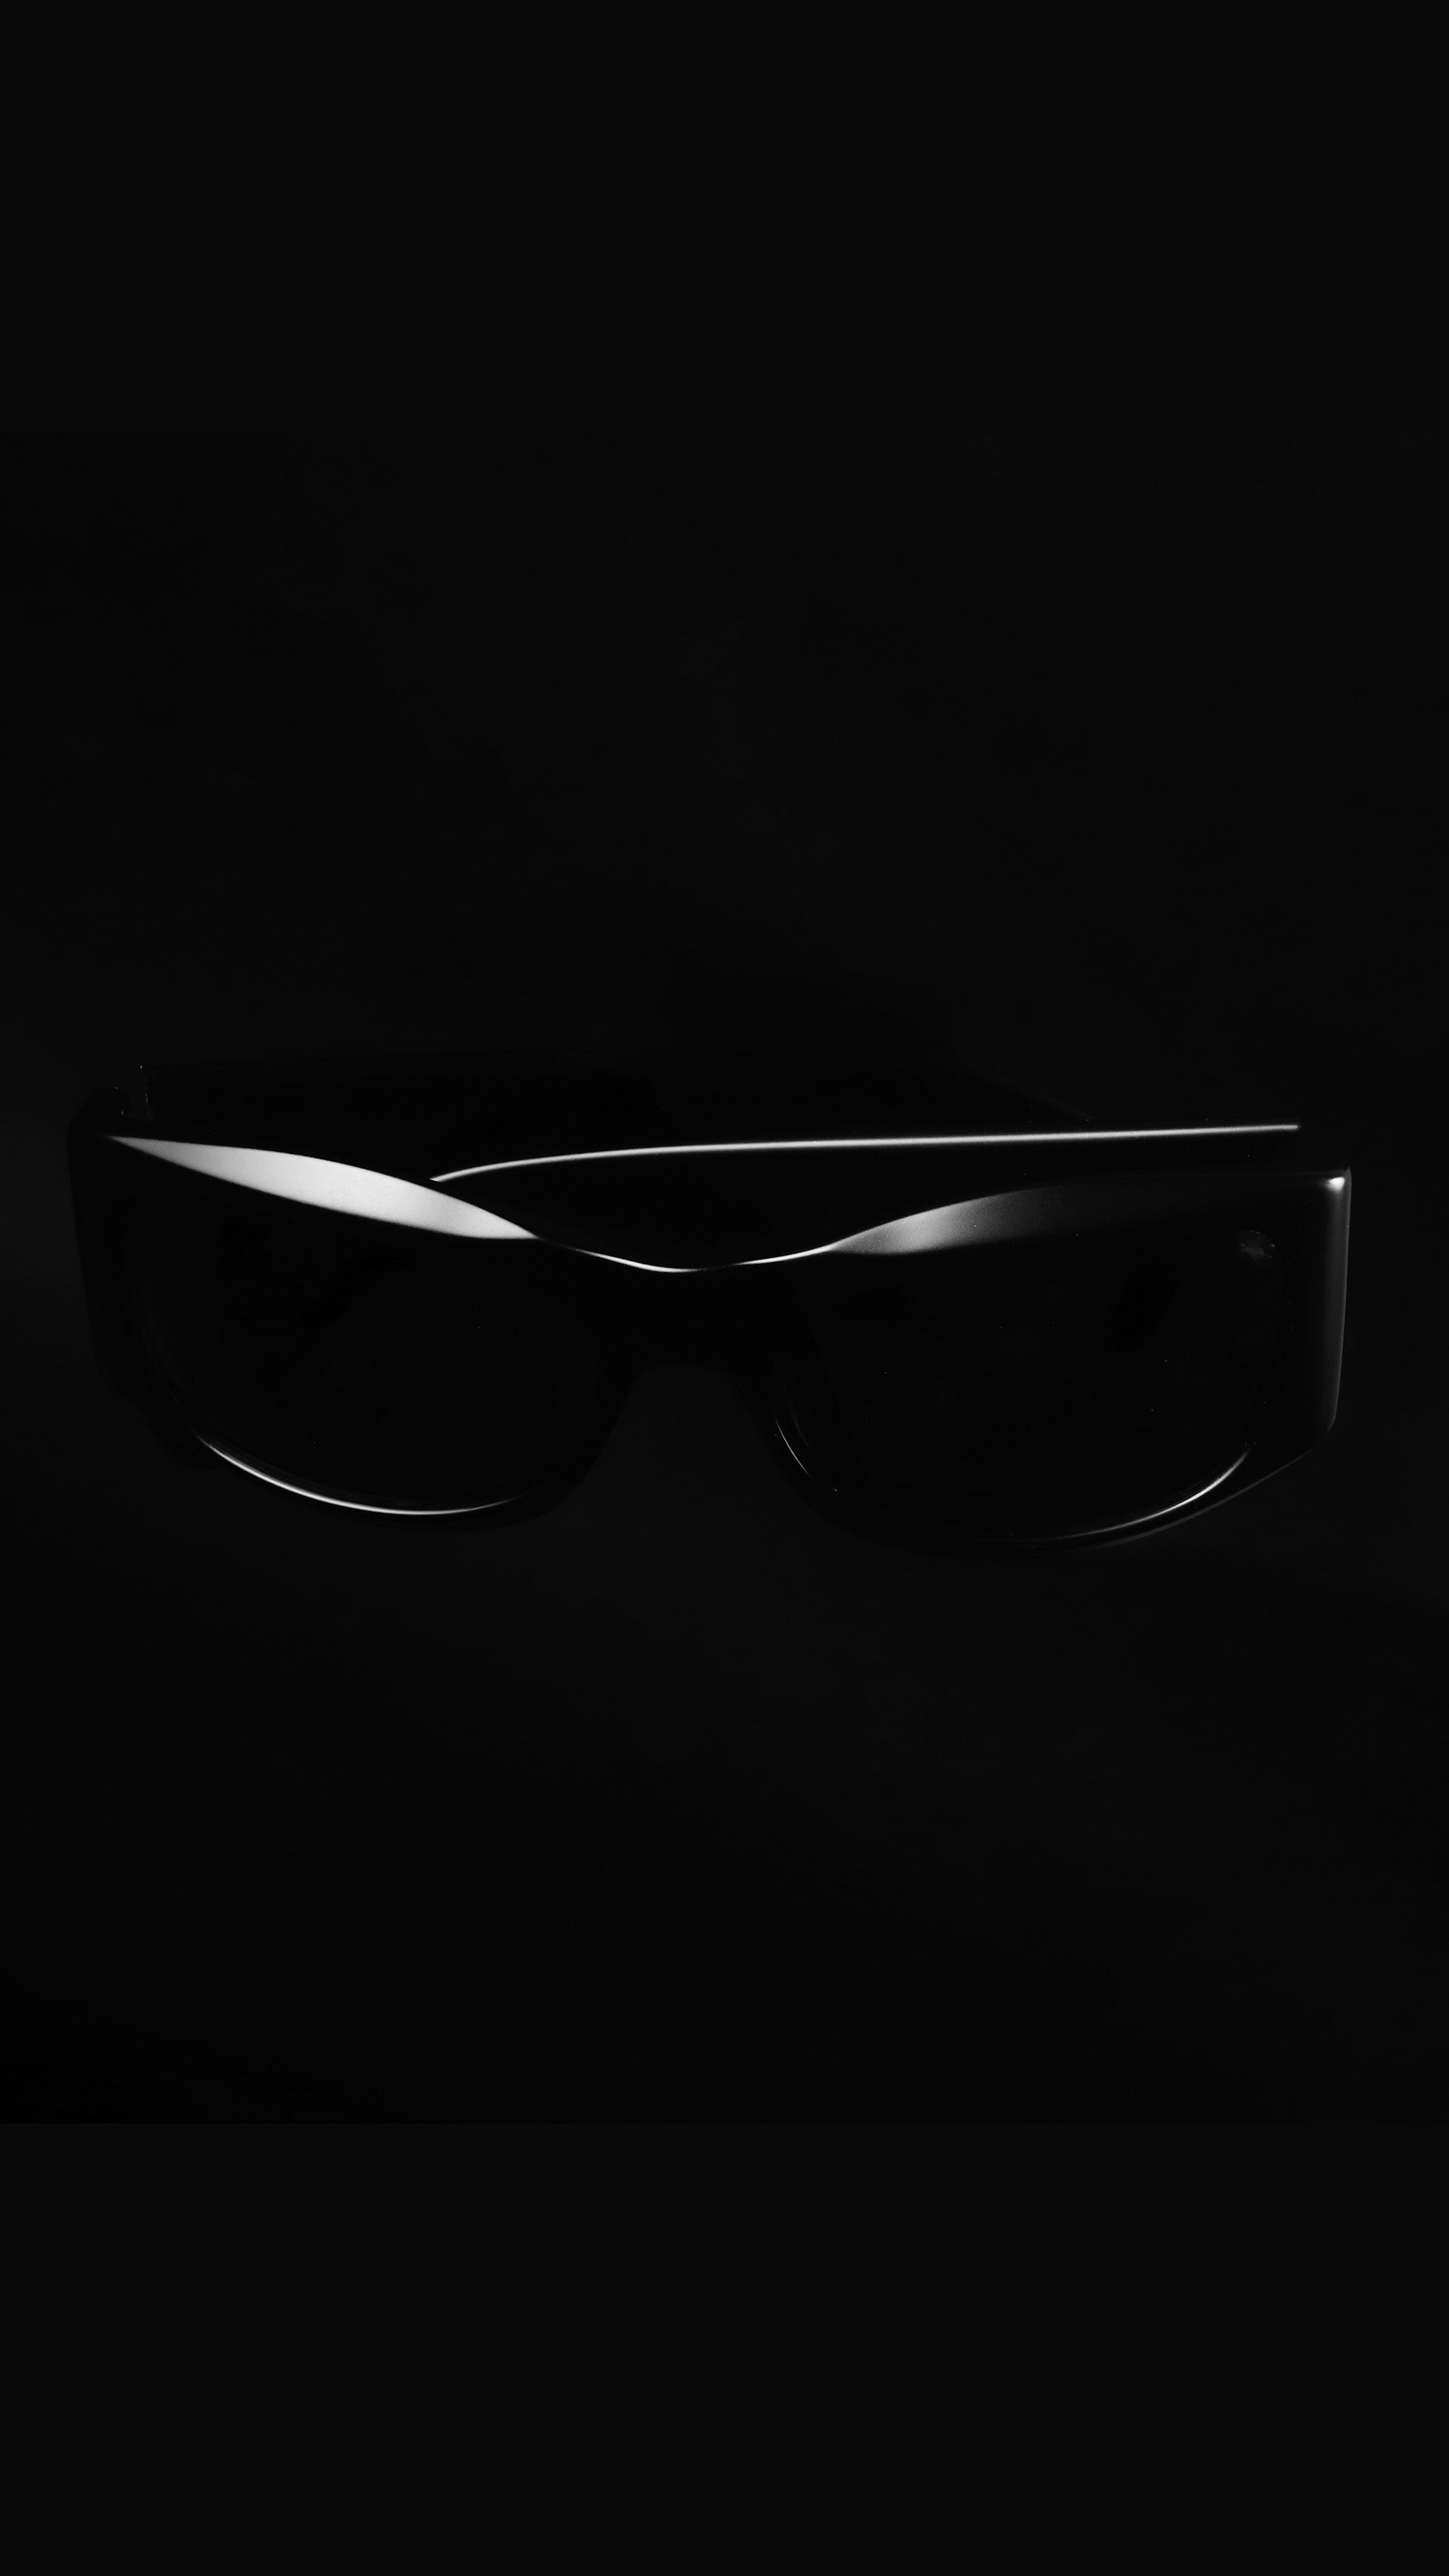 Black Aesthetic Sunglasses